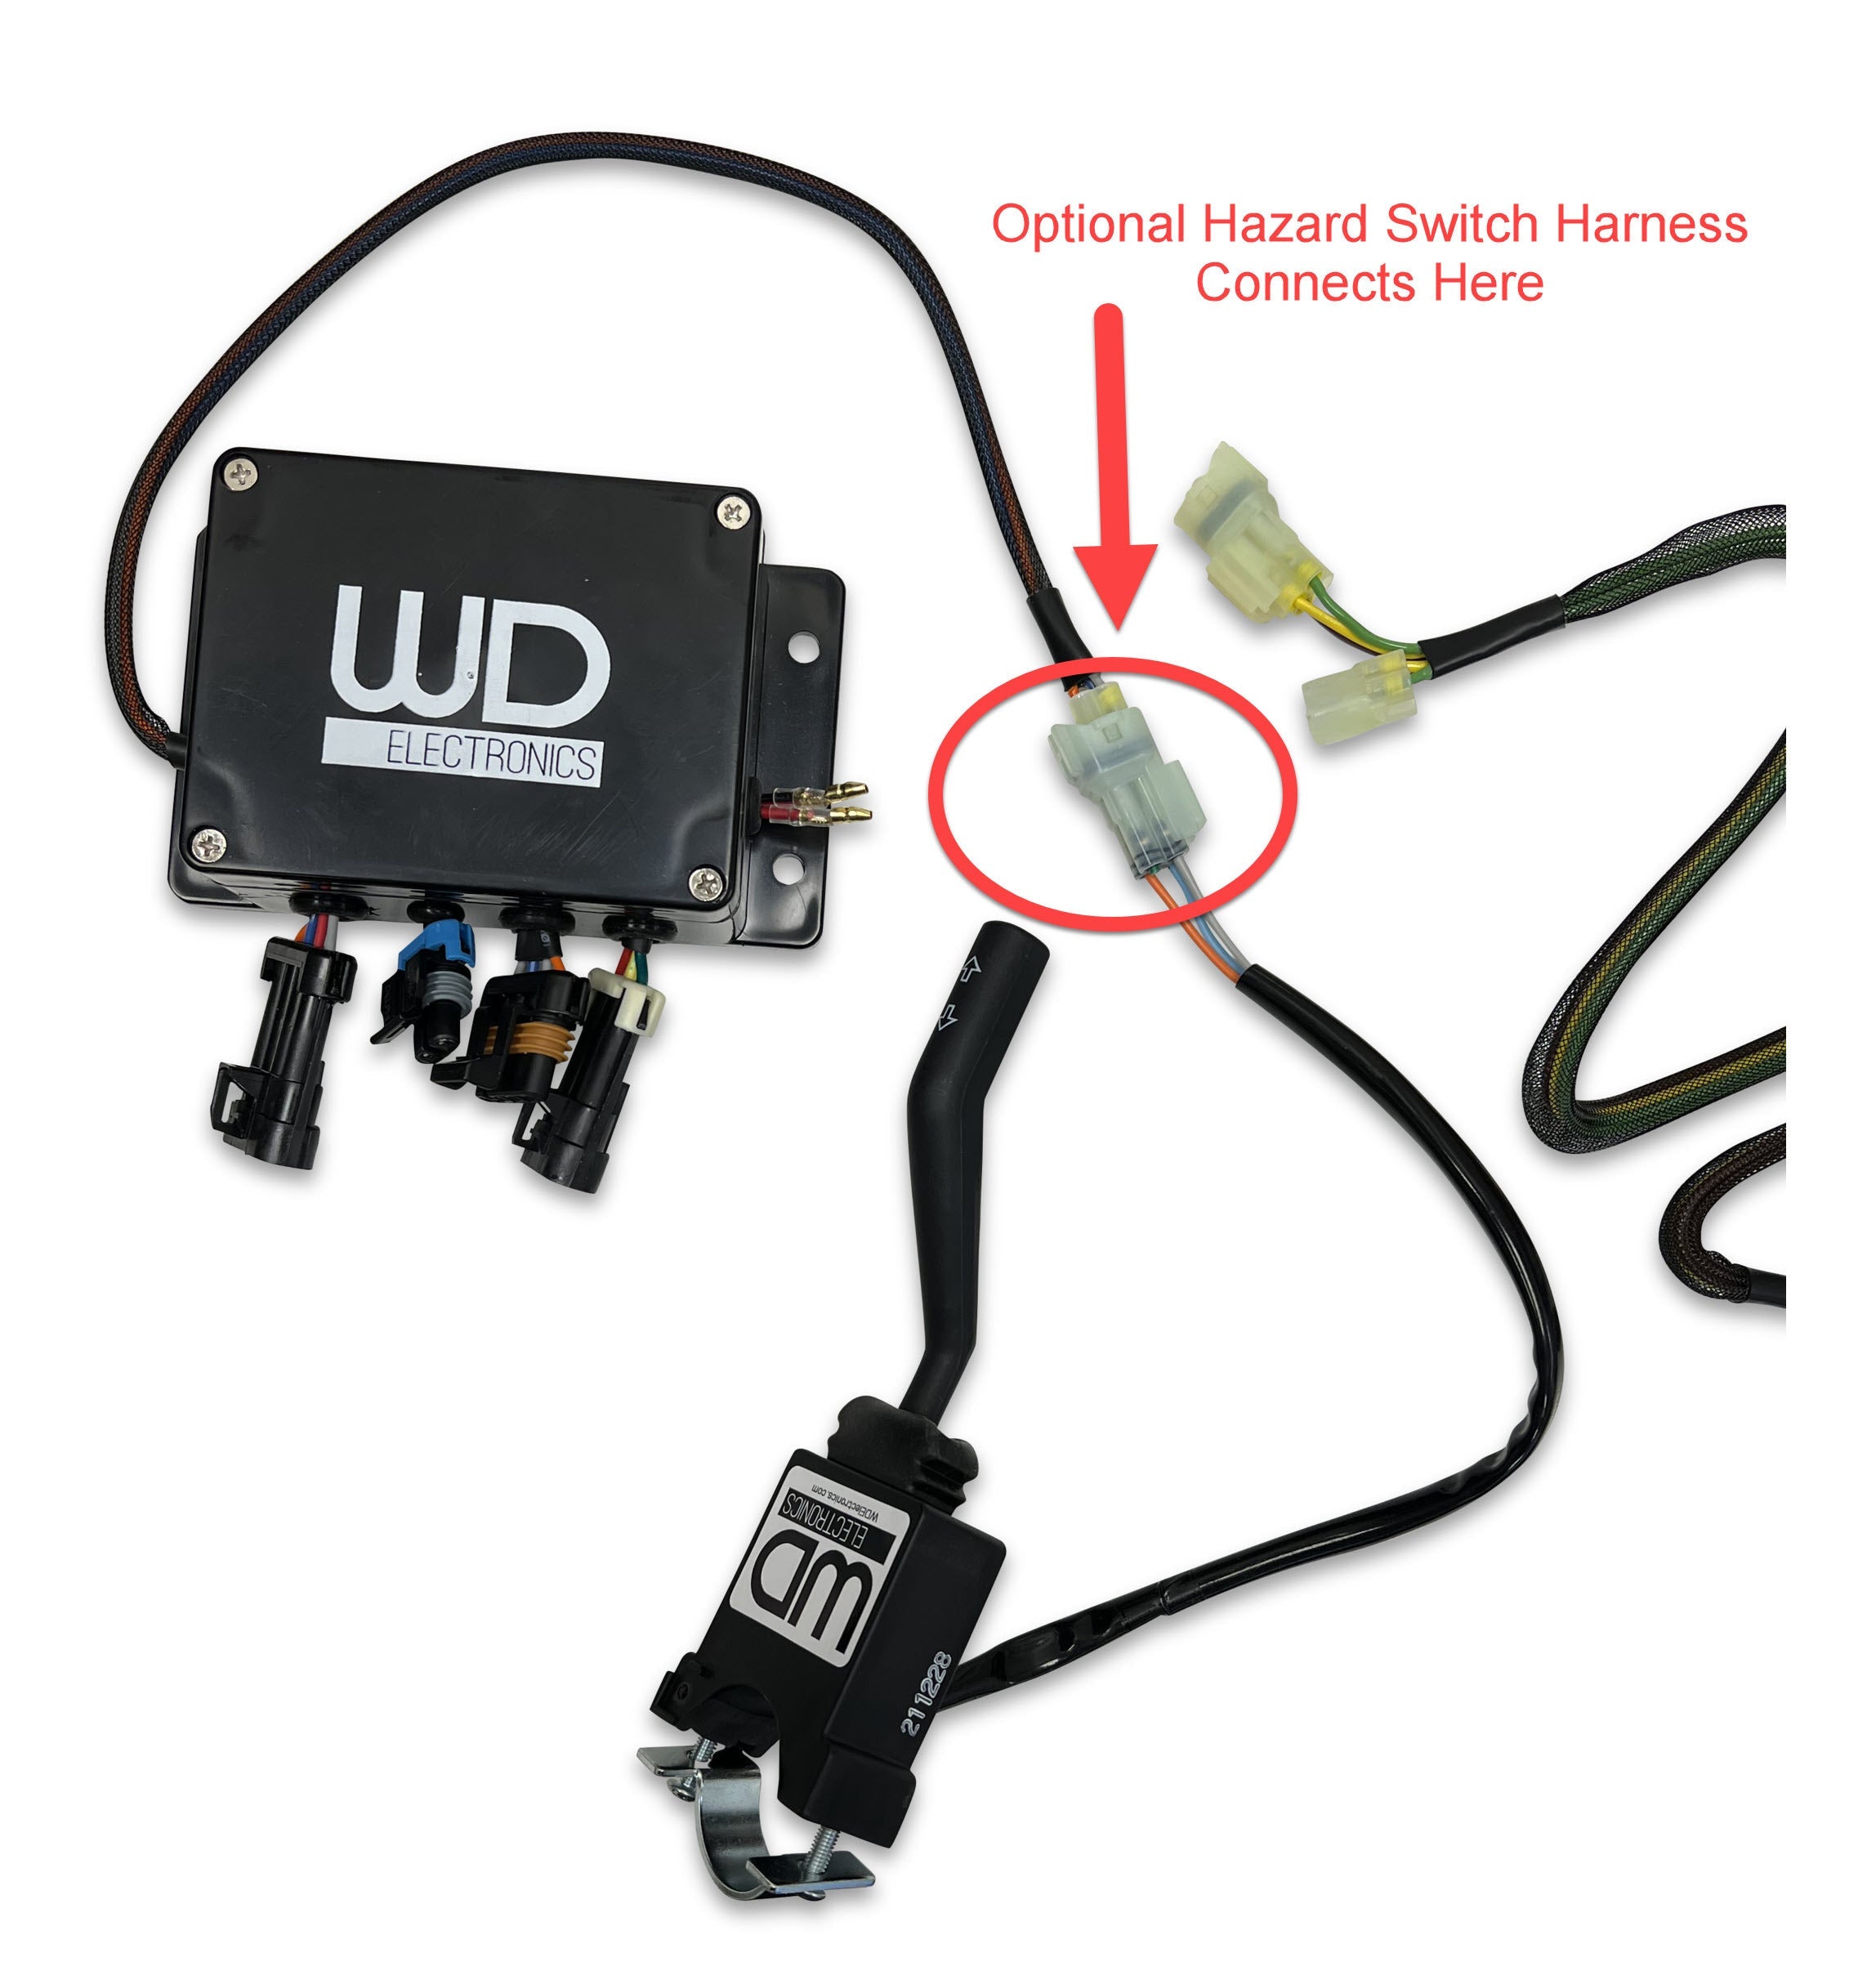 Hazard Add-On to WD Turn Signal Kit